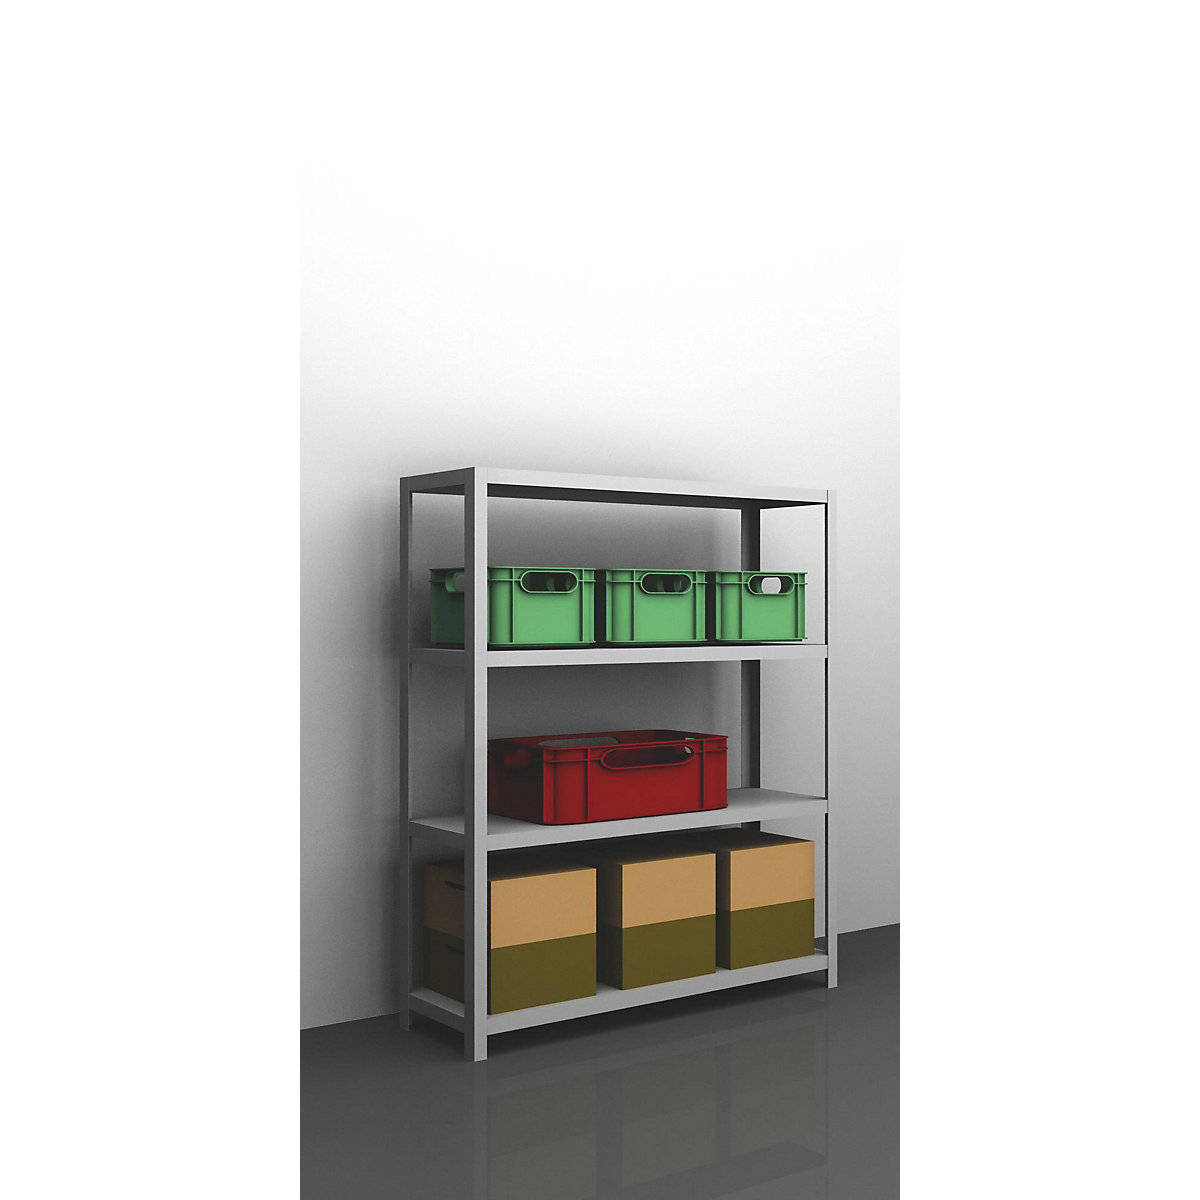 Bolt-together shelf unit, light duty, zinc plated – eurokraft pro, shelf unit height 1500 mm, shelf width 1300 mm, depth 400 mm, standard shelf unit-14